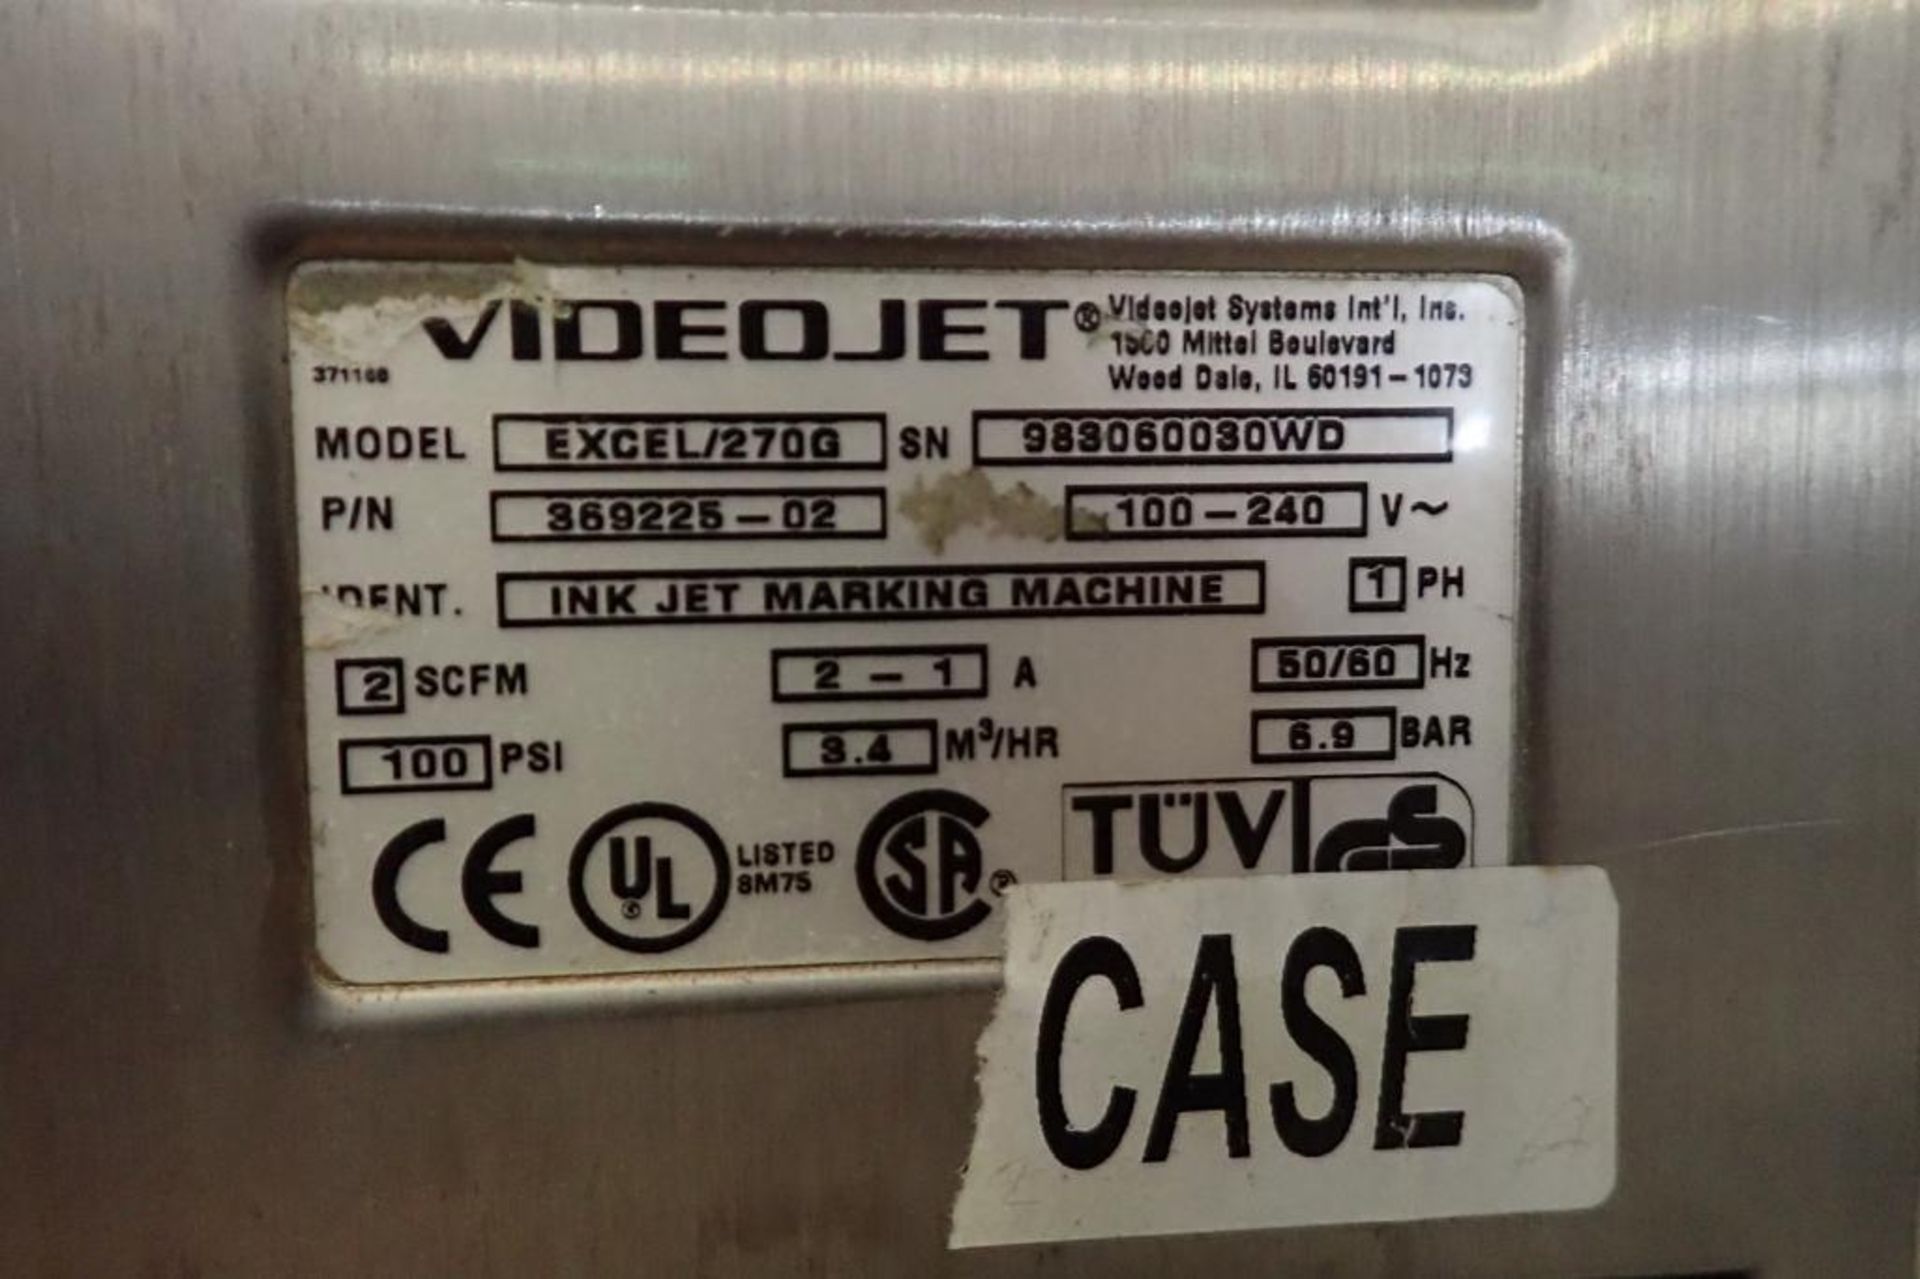 Videojet ink jet marking machine, Model excel series 270G, SN 983060030WD, 1 ph., 2 ink heads, on - Image 10 of 10